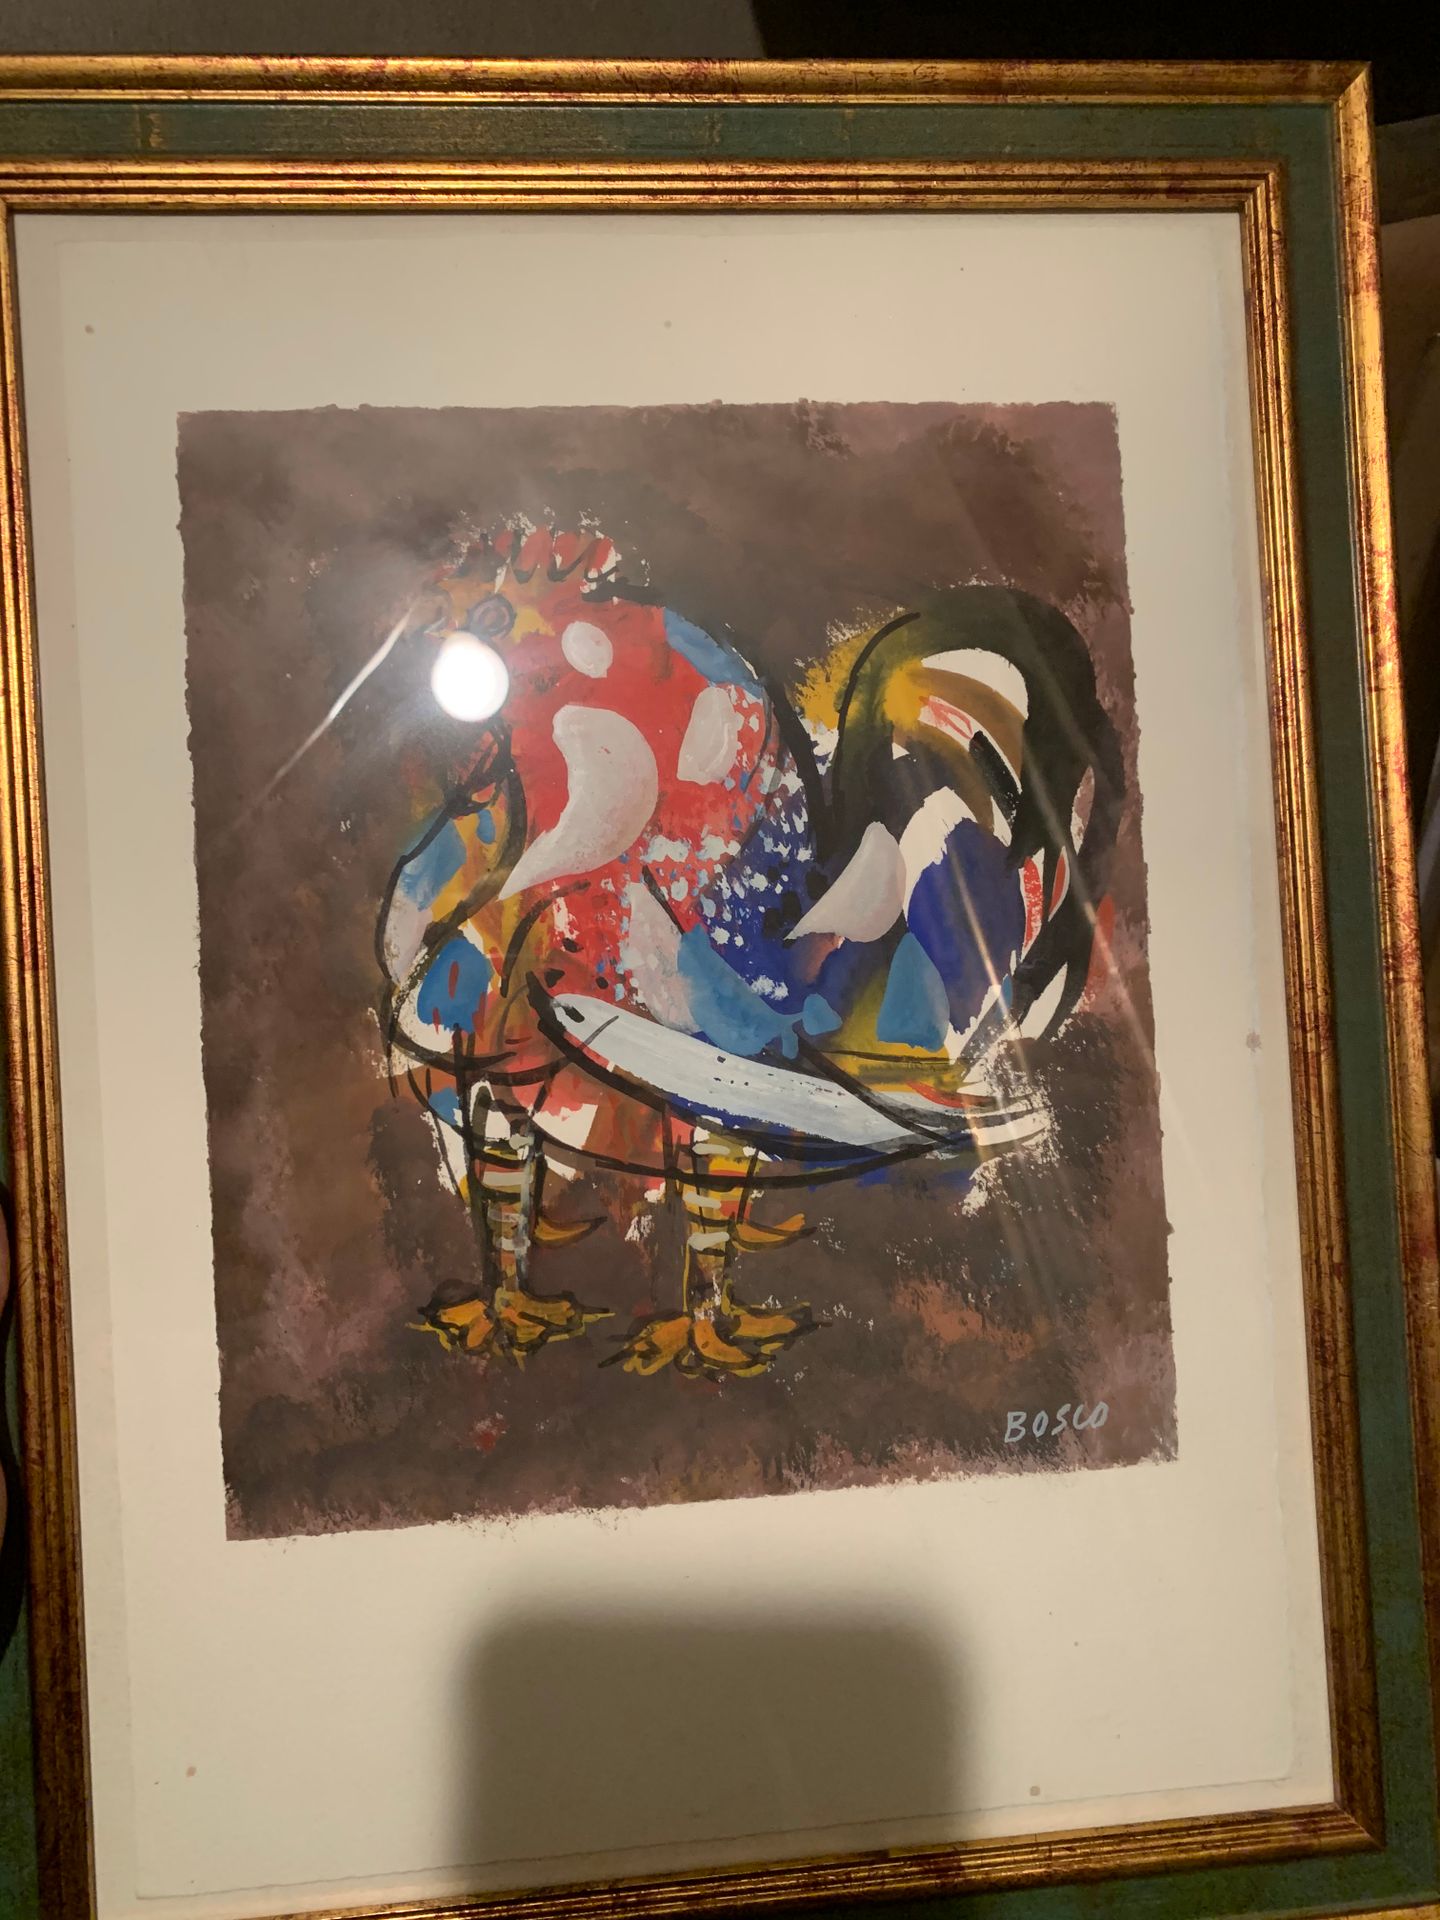 Null 皮埃尔-博斯克 (1909-1993)

公鸡

纸上水粉画，右下角有签名

39 x 30厘米